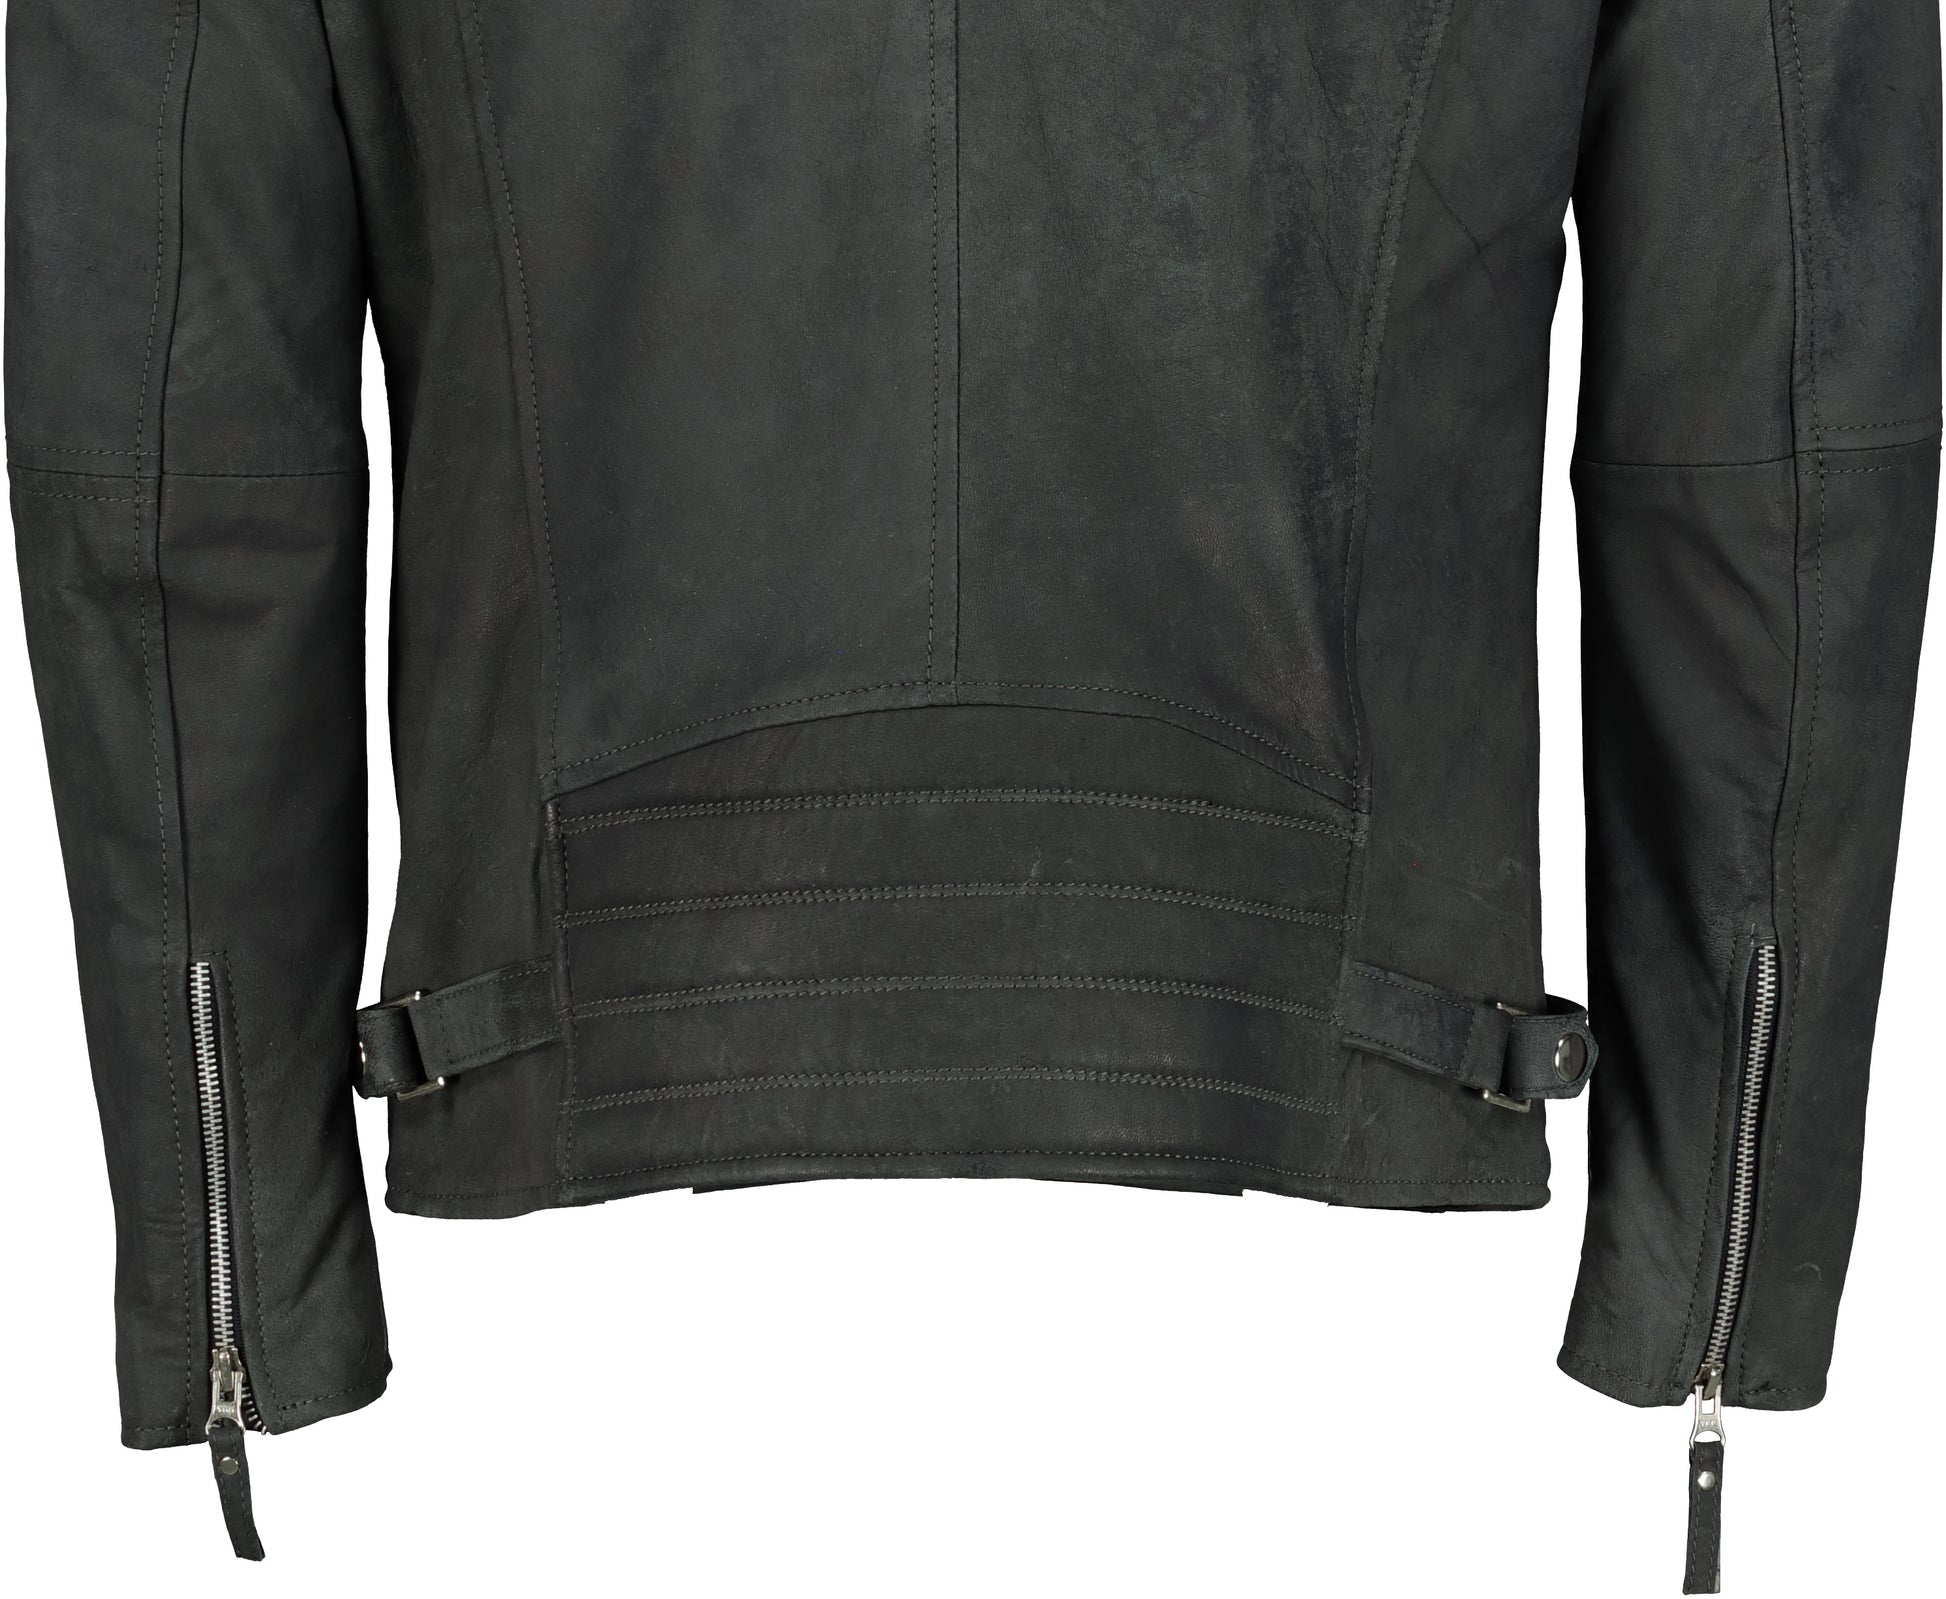 Men's Jhonny-B Olive Snuff Leather Jacket- Supreme Leather Supreme Leather